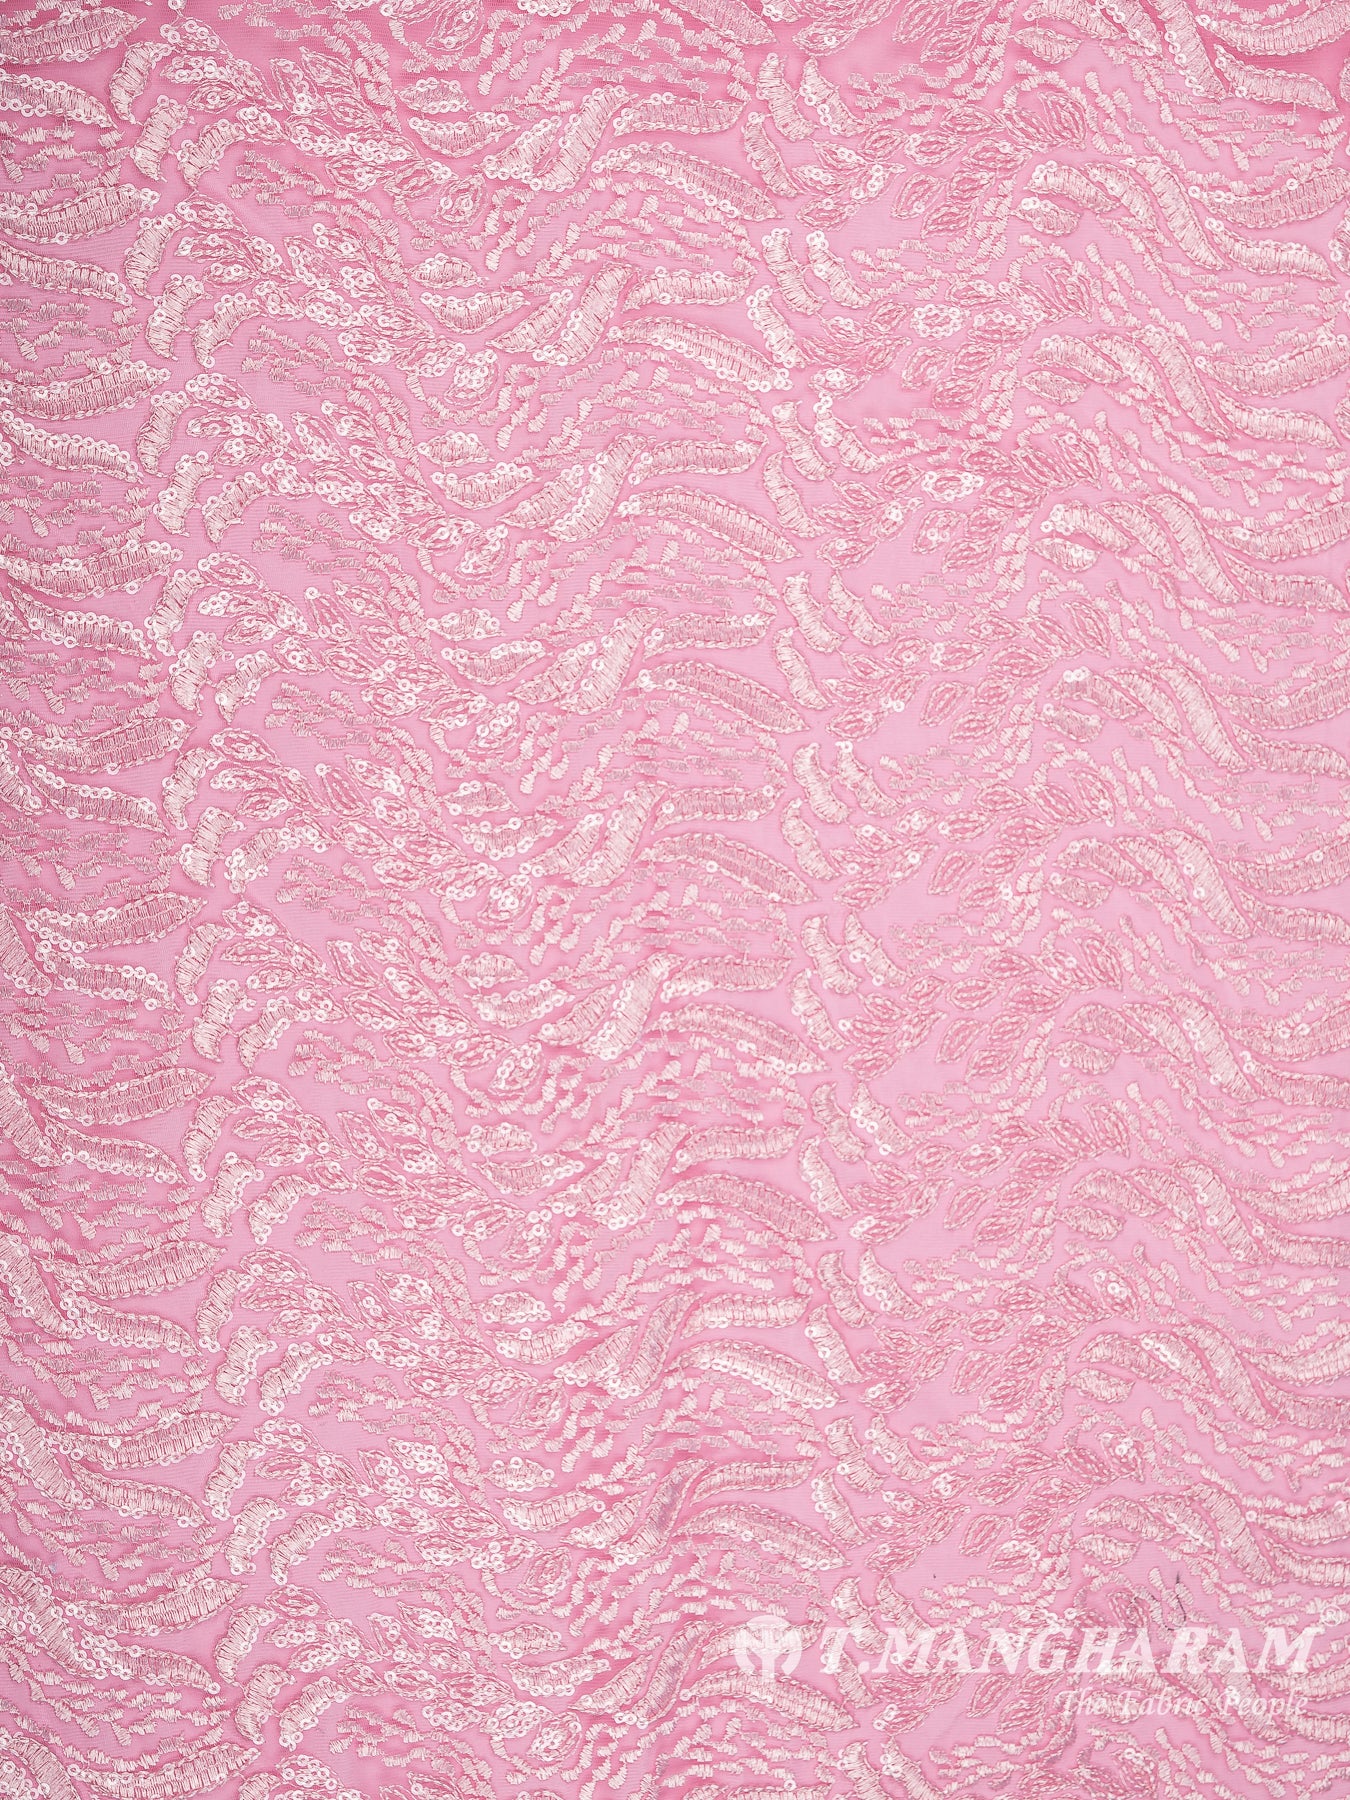 Pink Fancy Net Fabric - EB5799 view-3